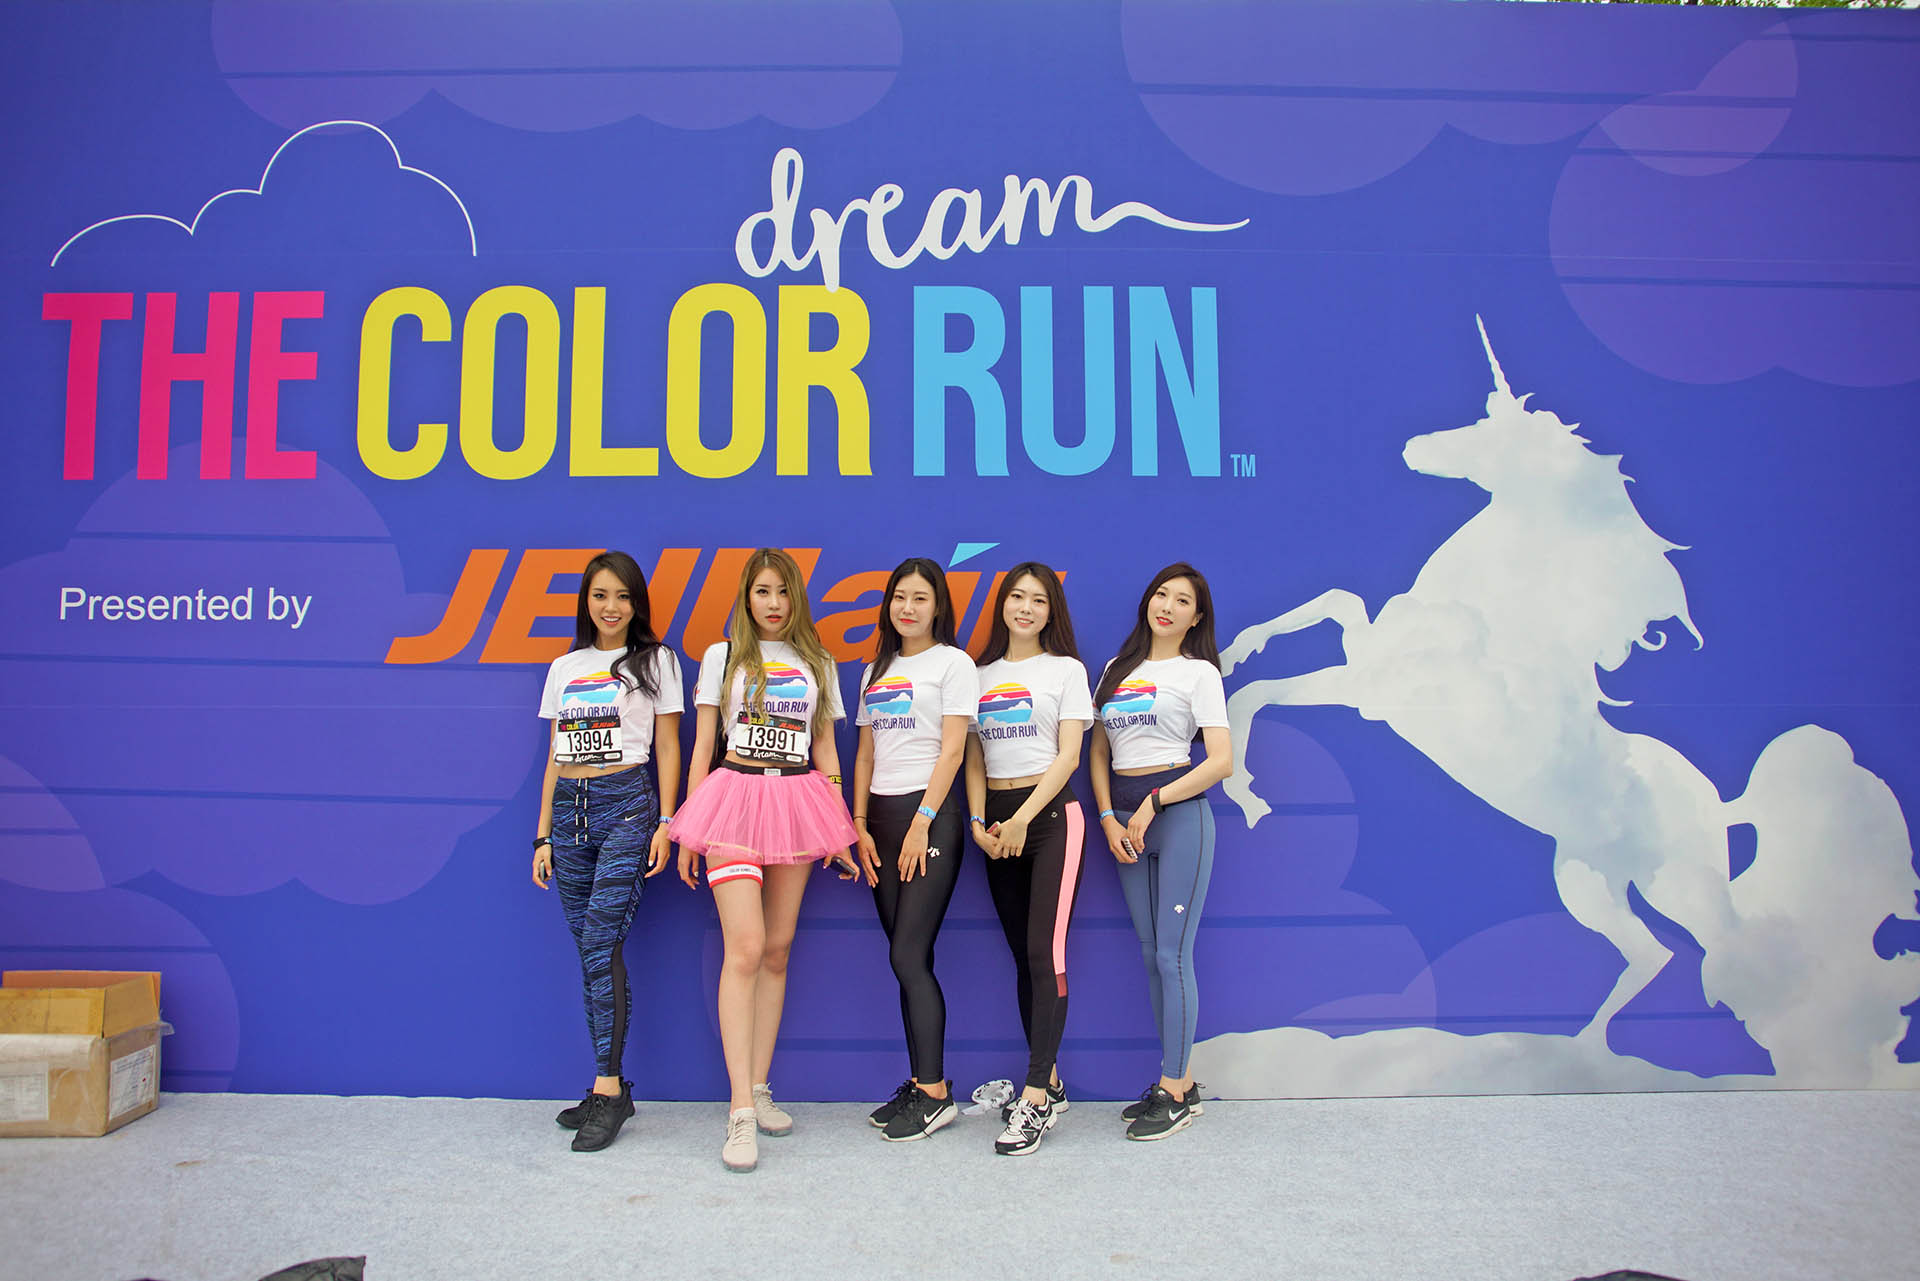 2018 Color Run Hero Tour Seoul will be held on November 10